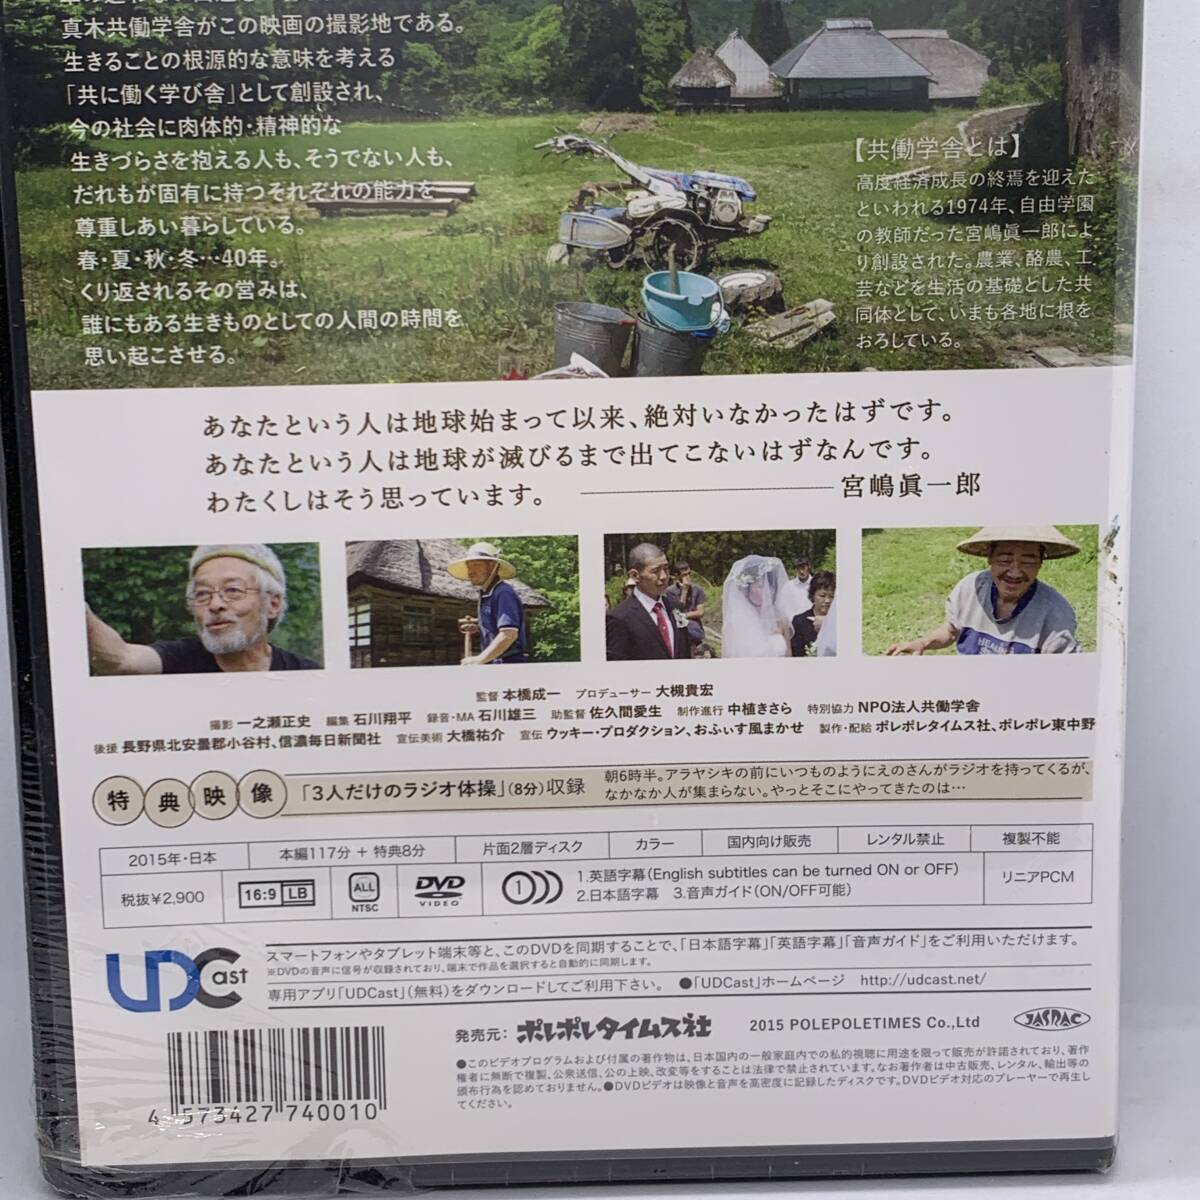 【DVD】アラヤシキの住人たち 未開封 本橋成一監督作品 ドキュメンタリー映画 20240413G96